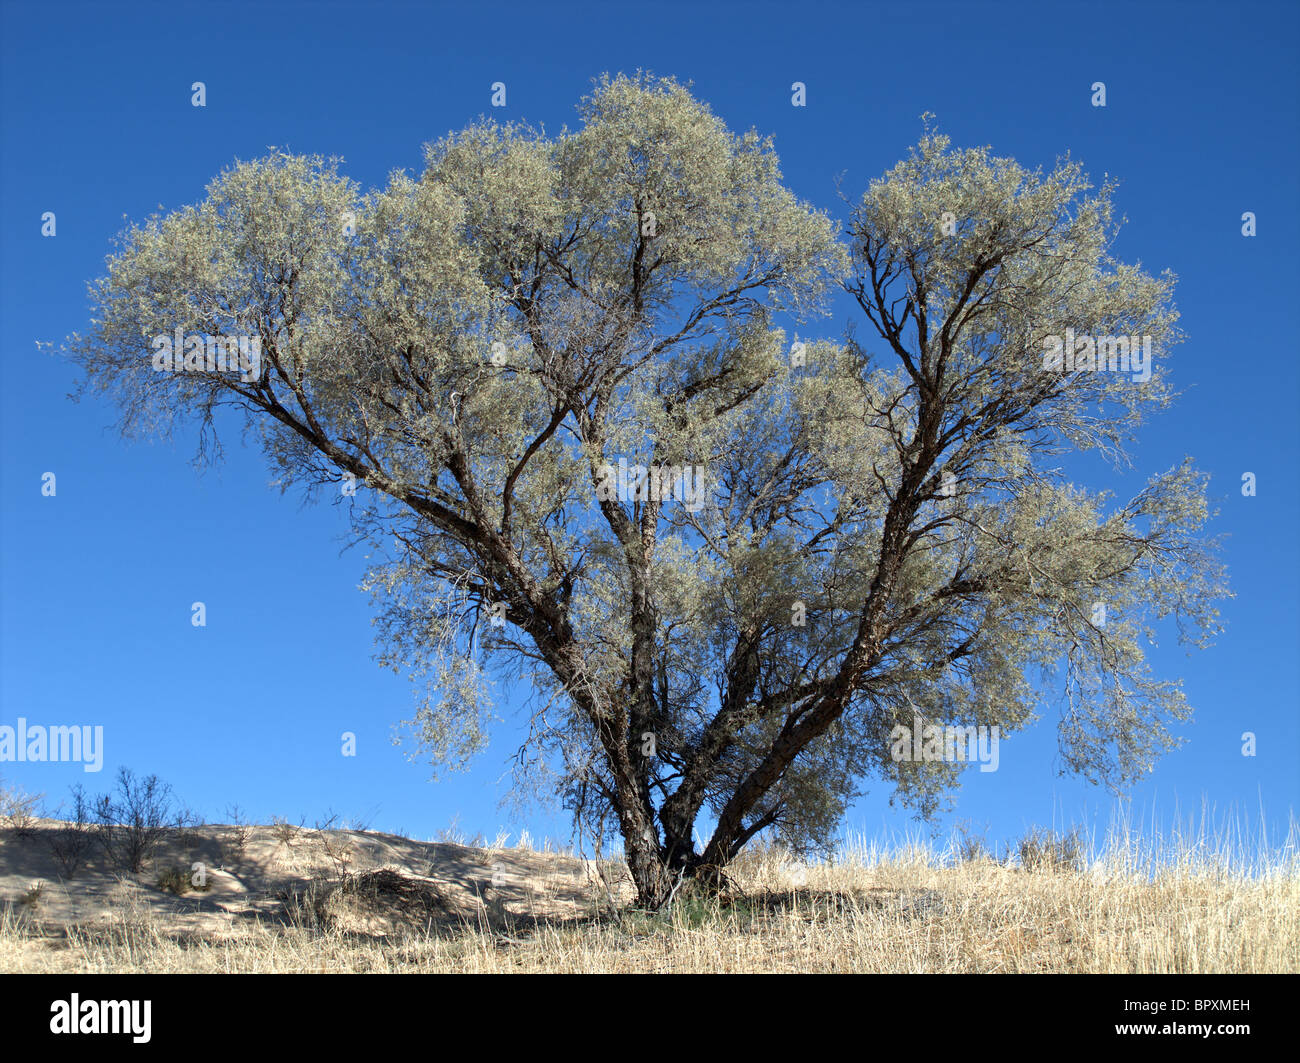 African Acacia tree (Acacia haematoxylon) against a blue sky, South Africa Stock Photo